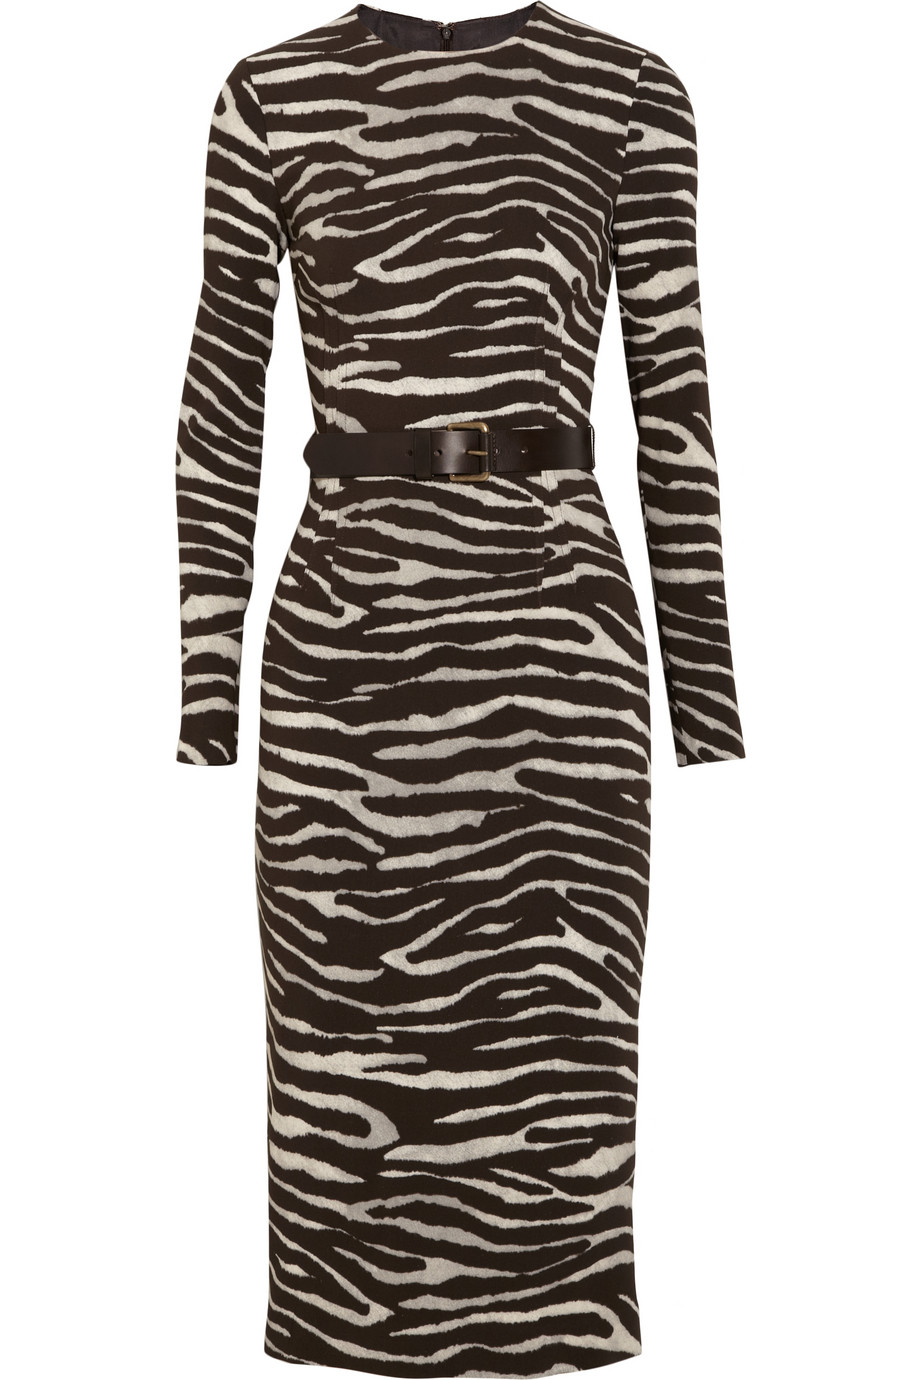 Michael Kors Belted Zebra-print Stretch-crepe Dress in Brown (mahogany ...